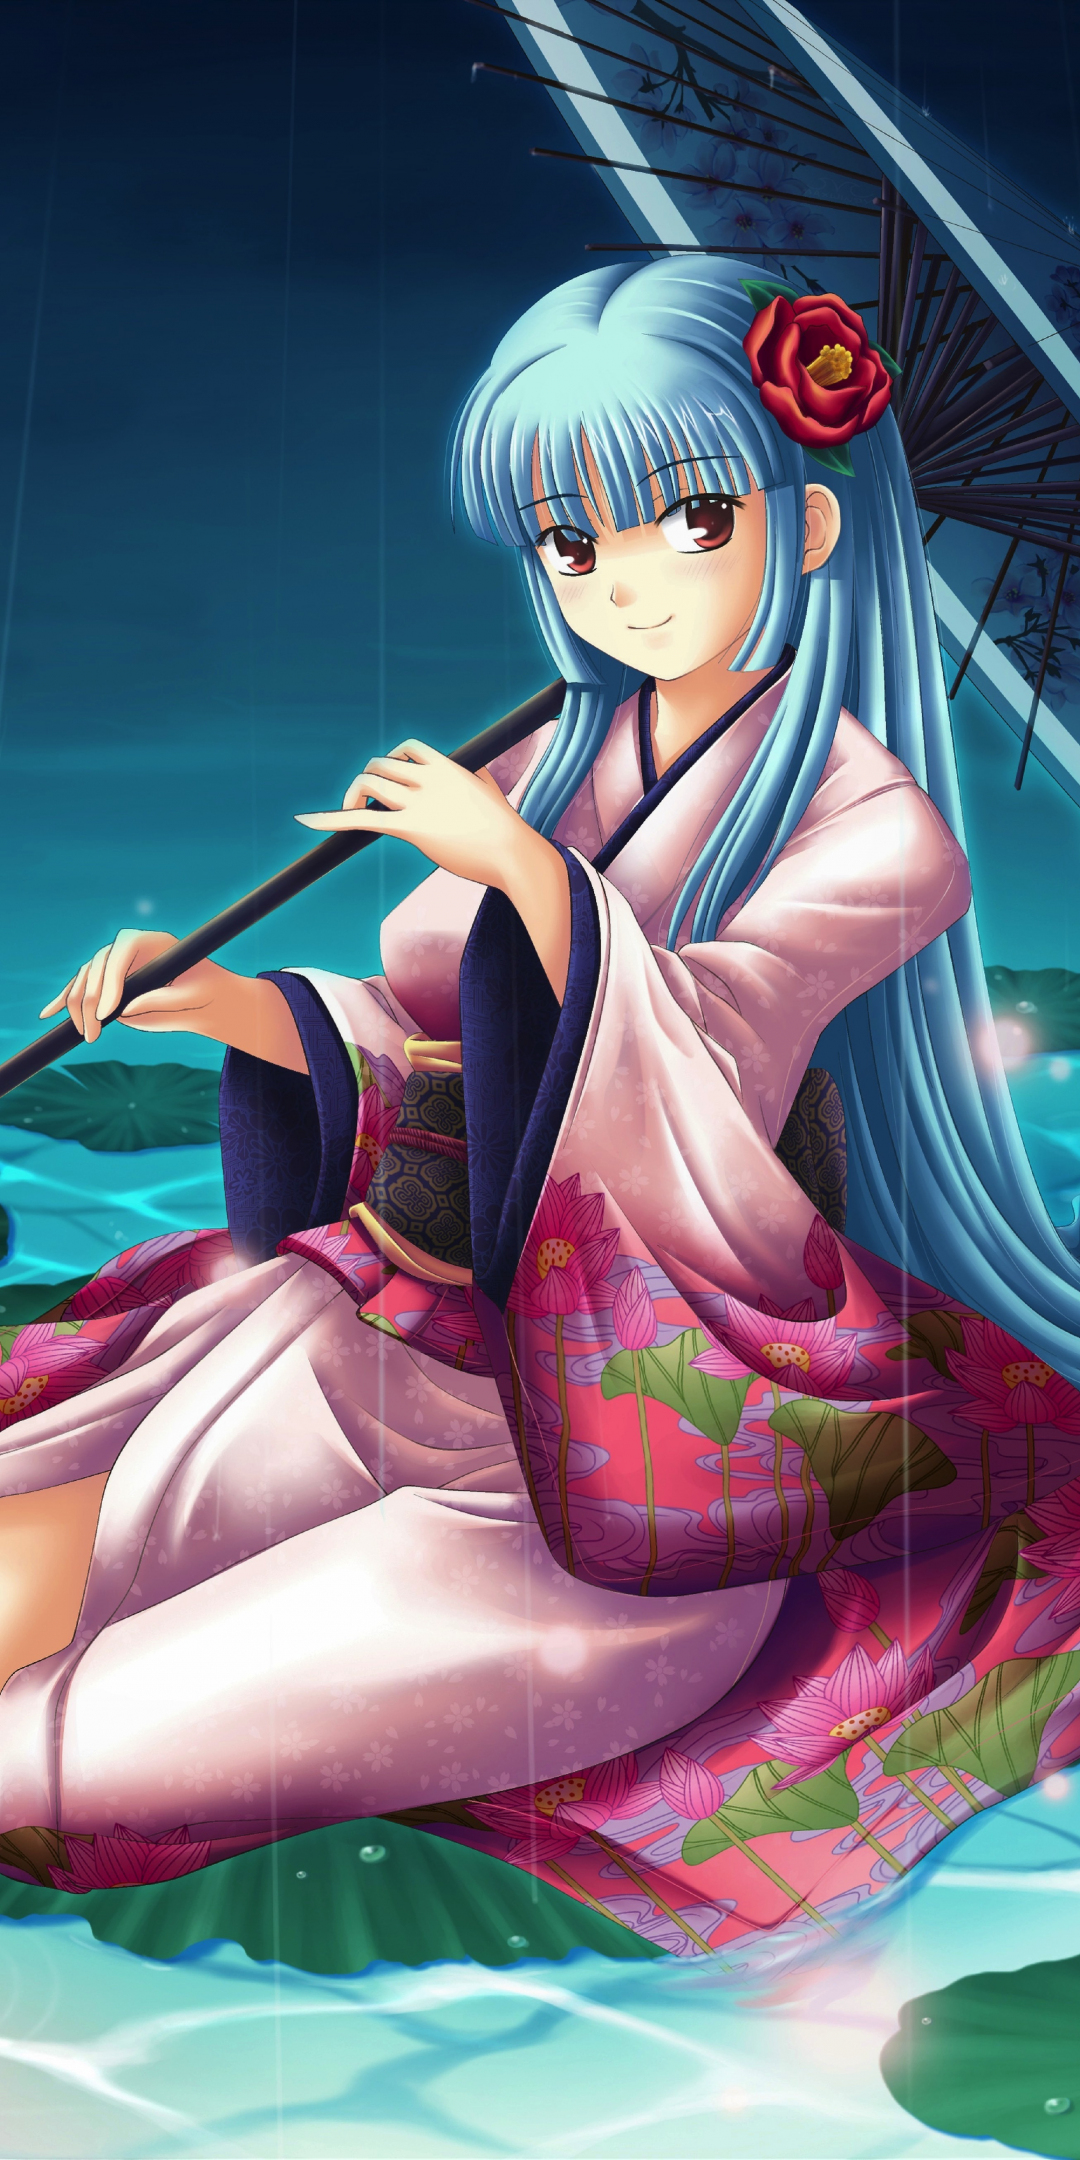 Pond, lake, flowers, anime girl, rain, umbrella, 1080x2160 wallpaper